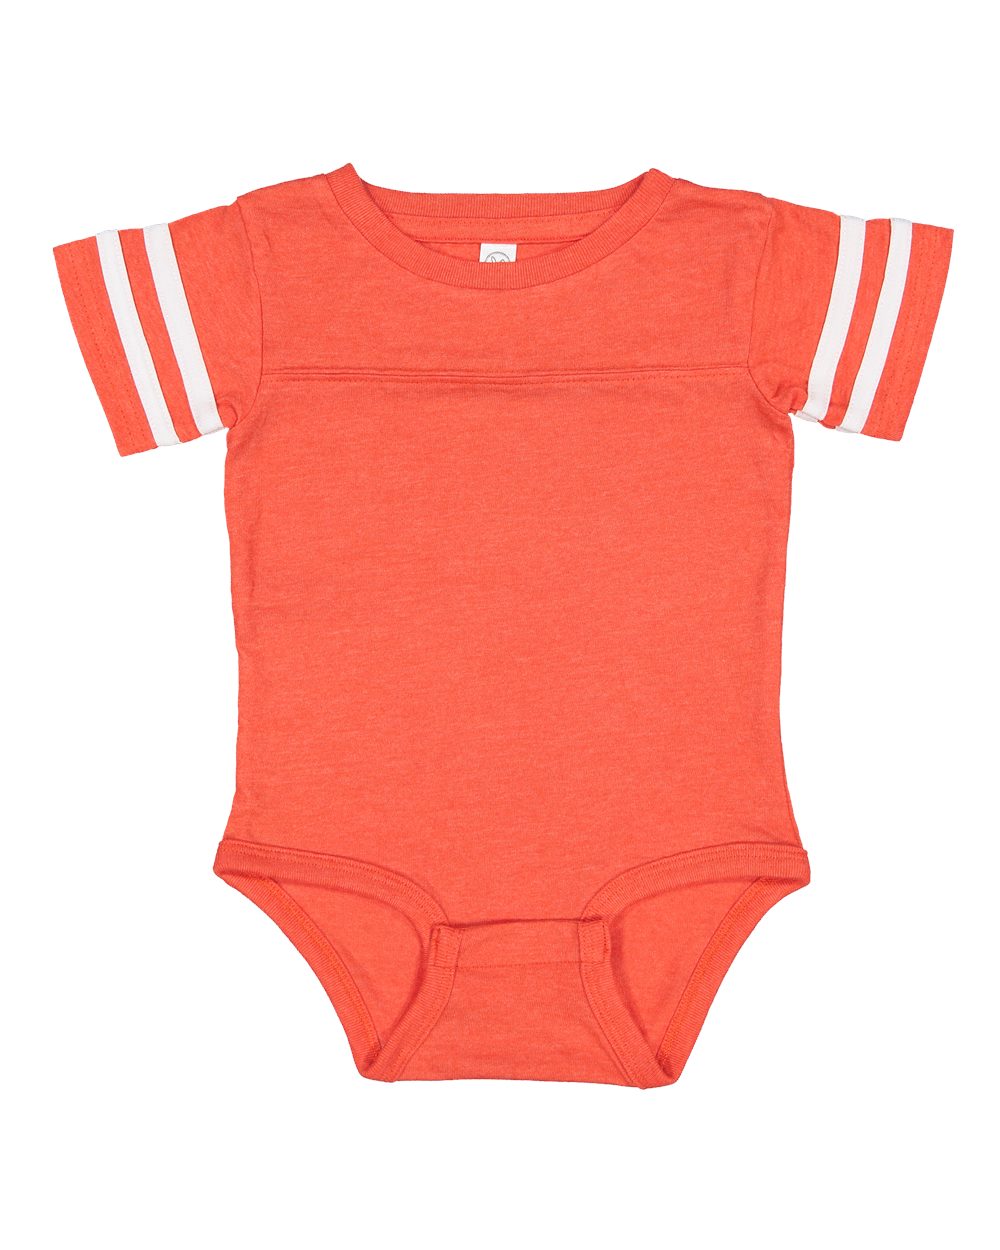 rabbit skins infant football jersey bodysuit vintage orange blended white